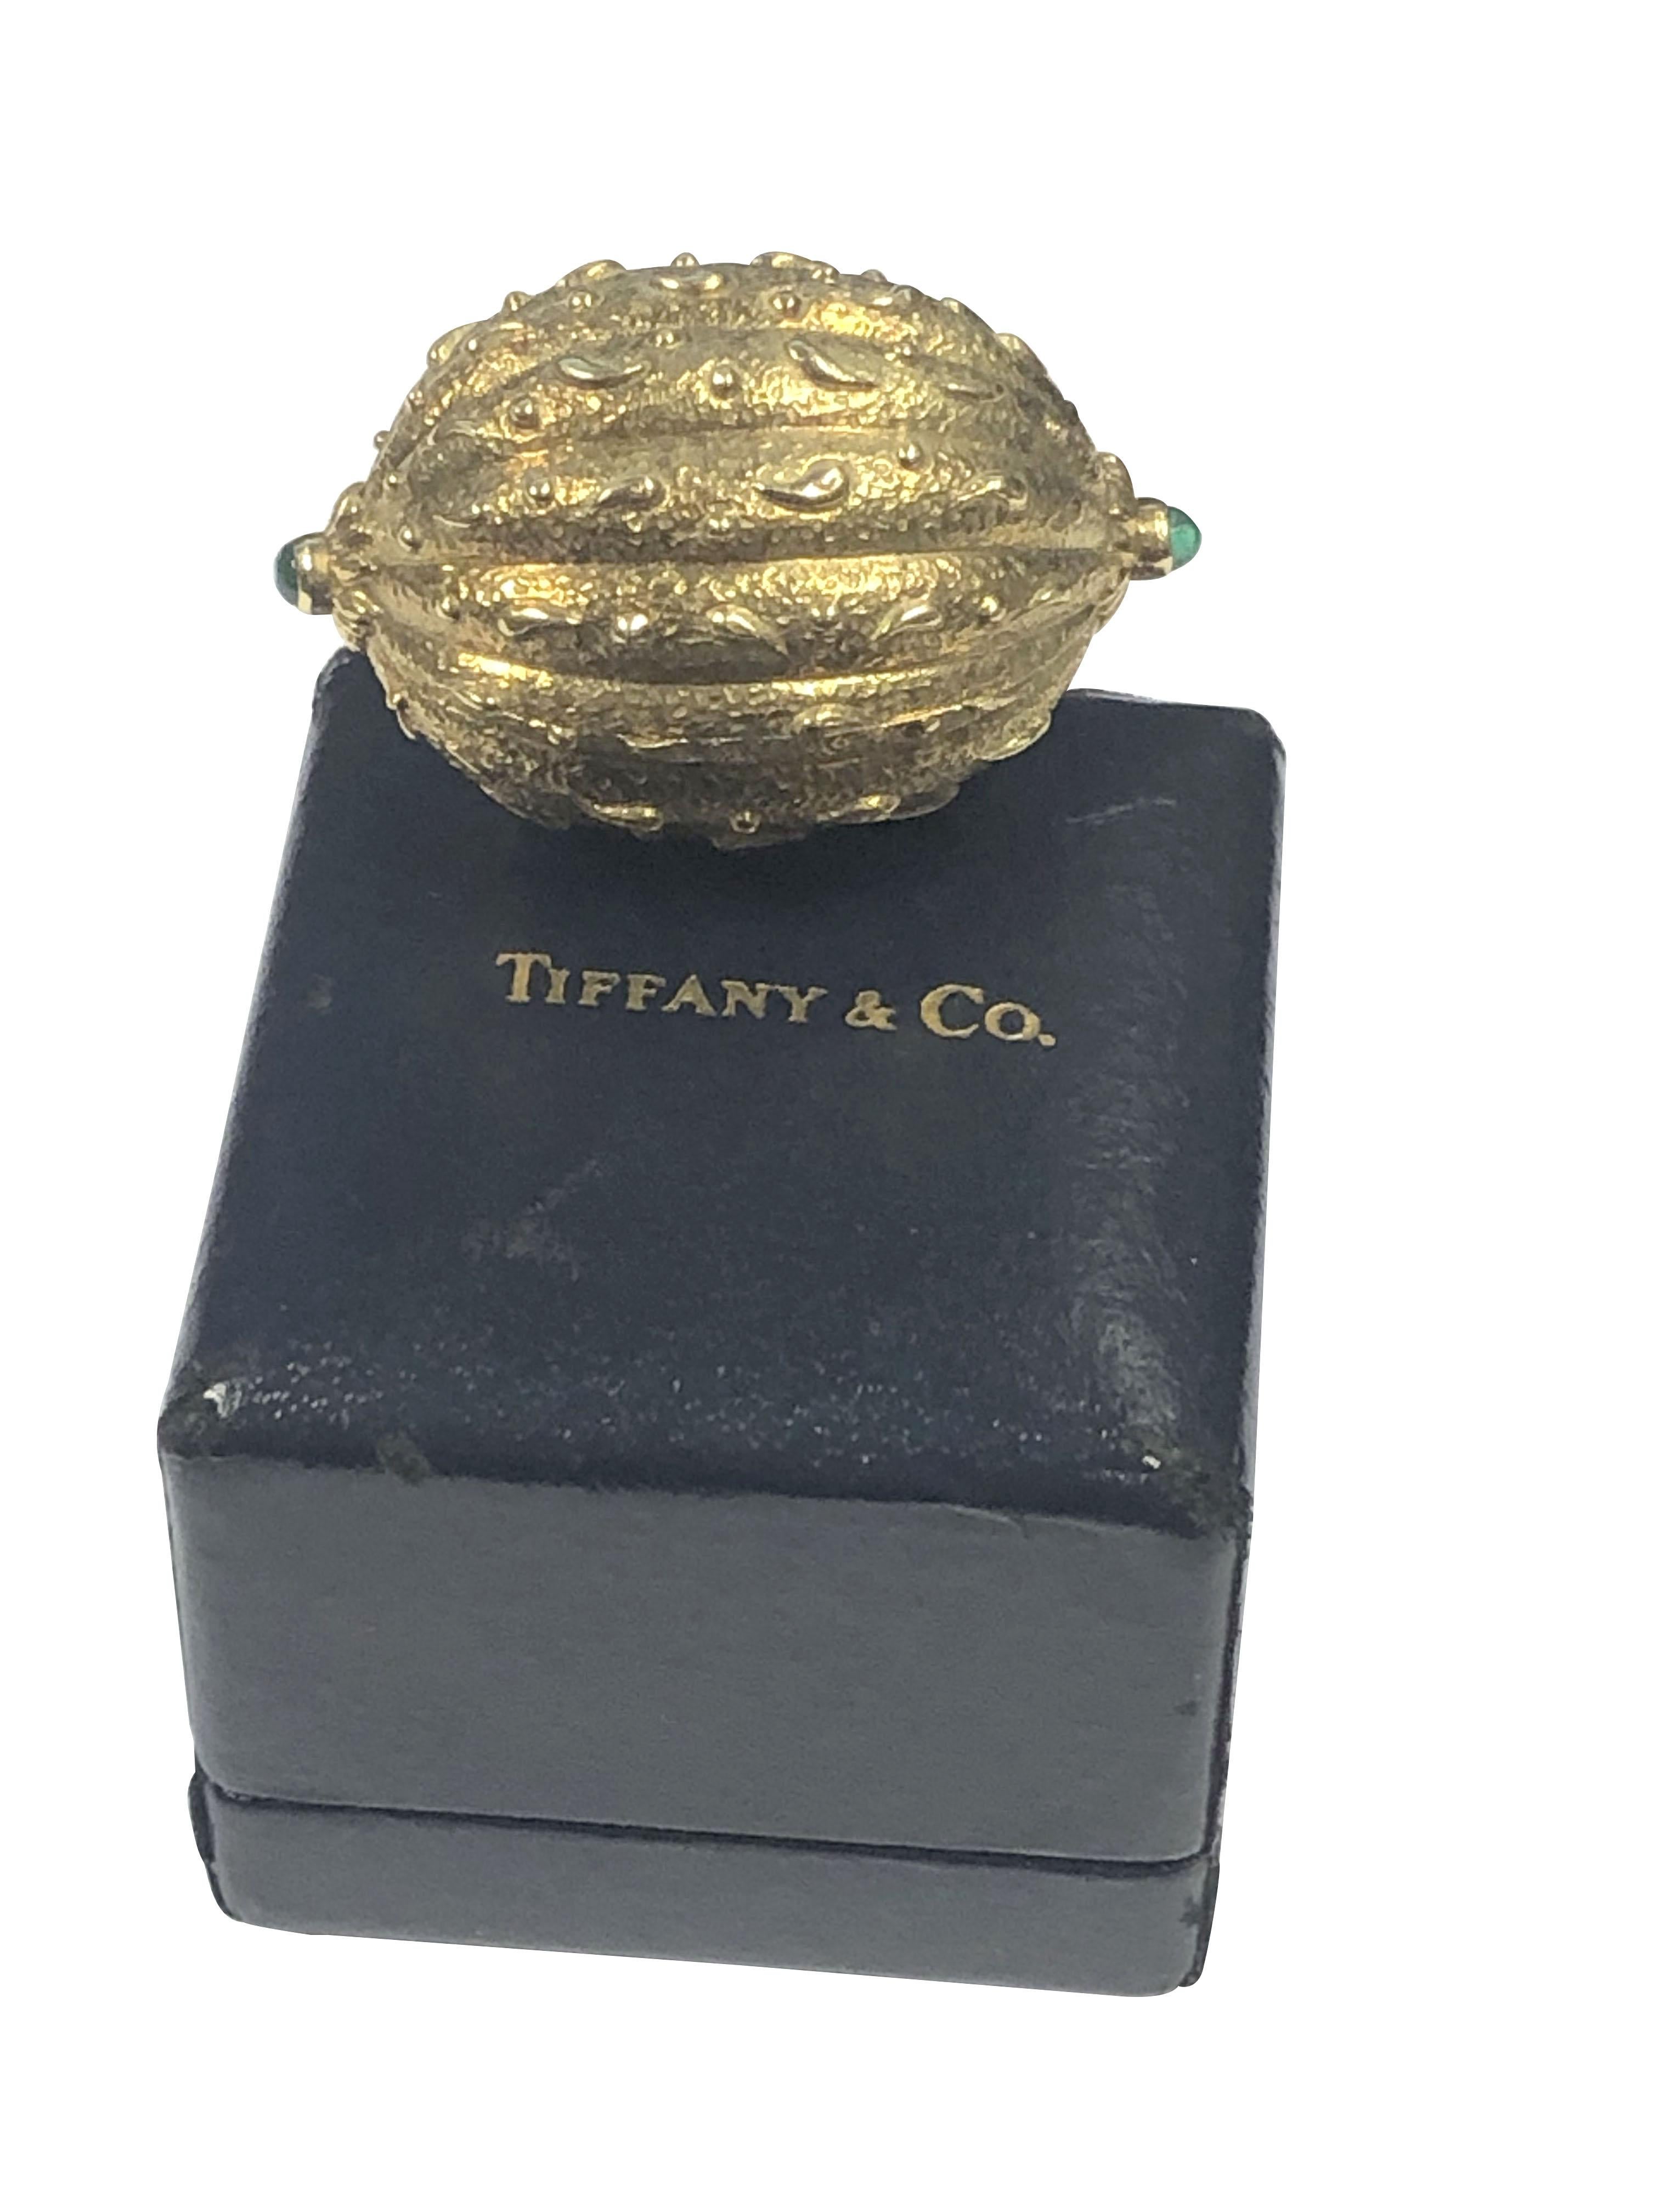 Tiffany & Company Schlumberger Yellow Gold Walnut Pill Box 1